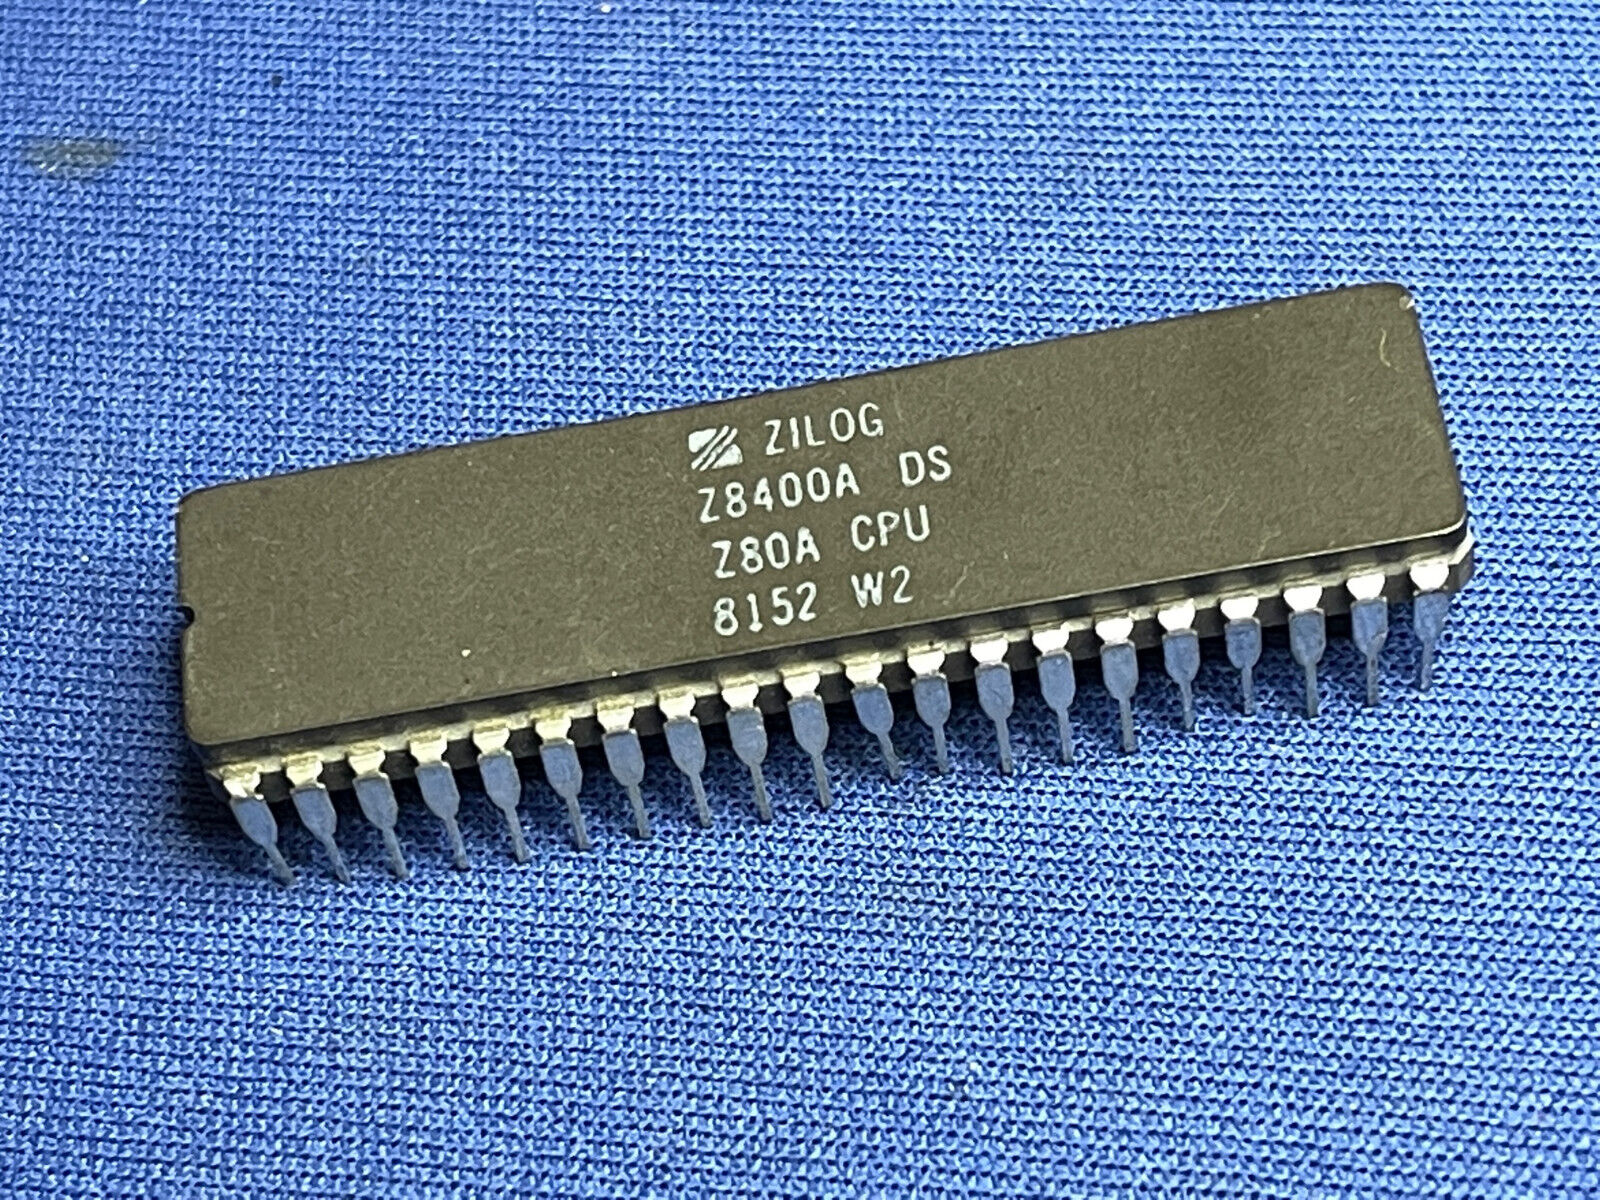 Z8400A DS Z80A CPU ZILOG 40-PIN CERDIP 1981 Vintage Very Rare LAST ONE QTY-1